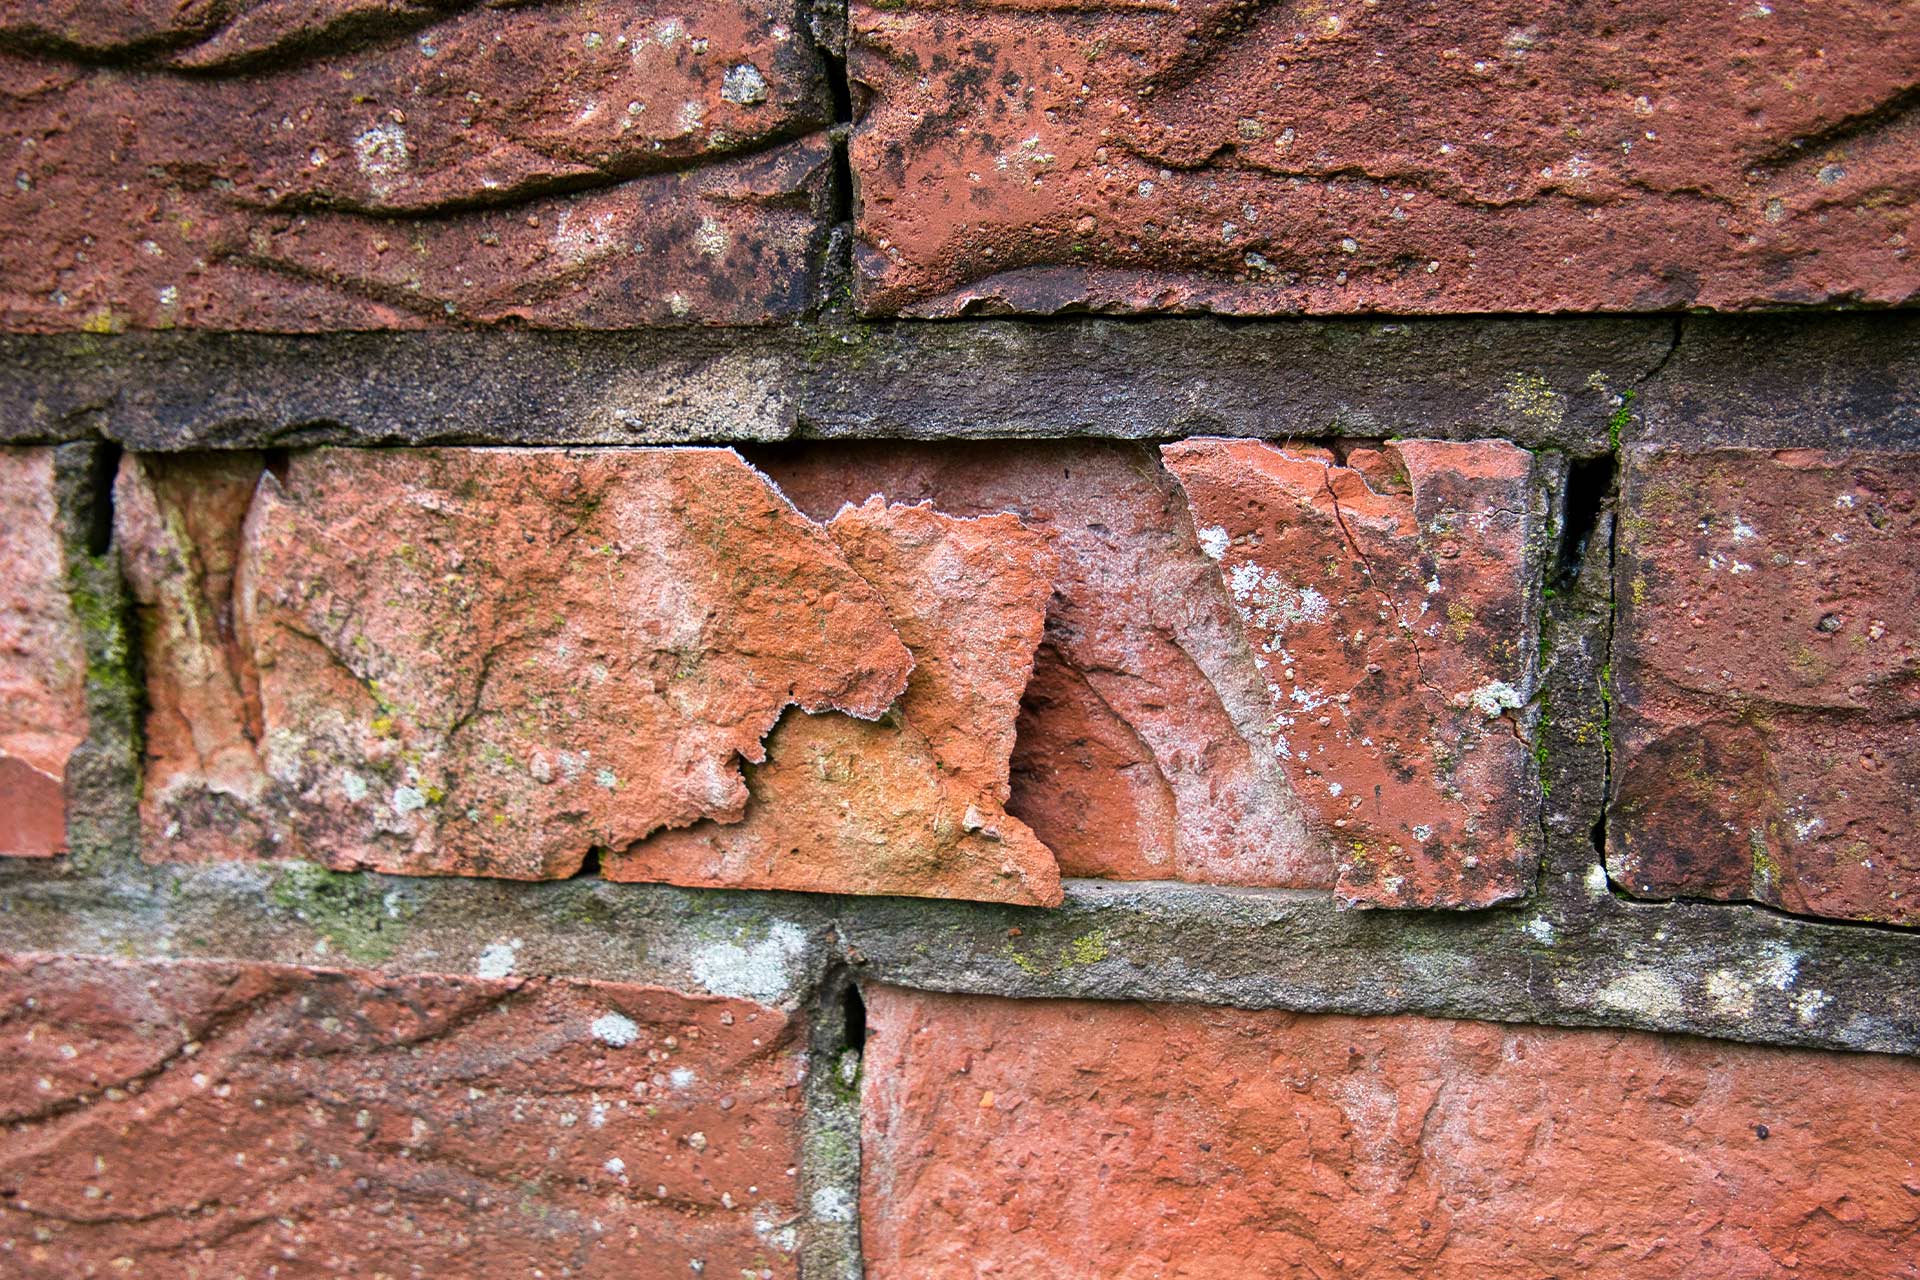 Replace damages bricks